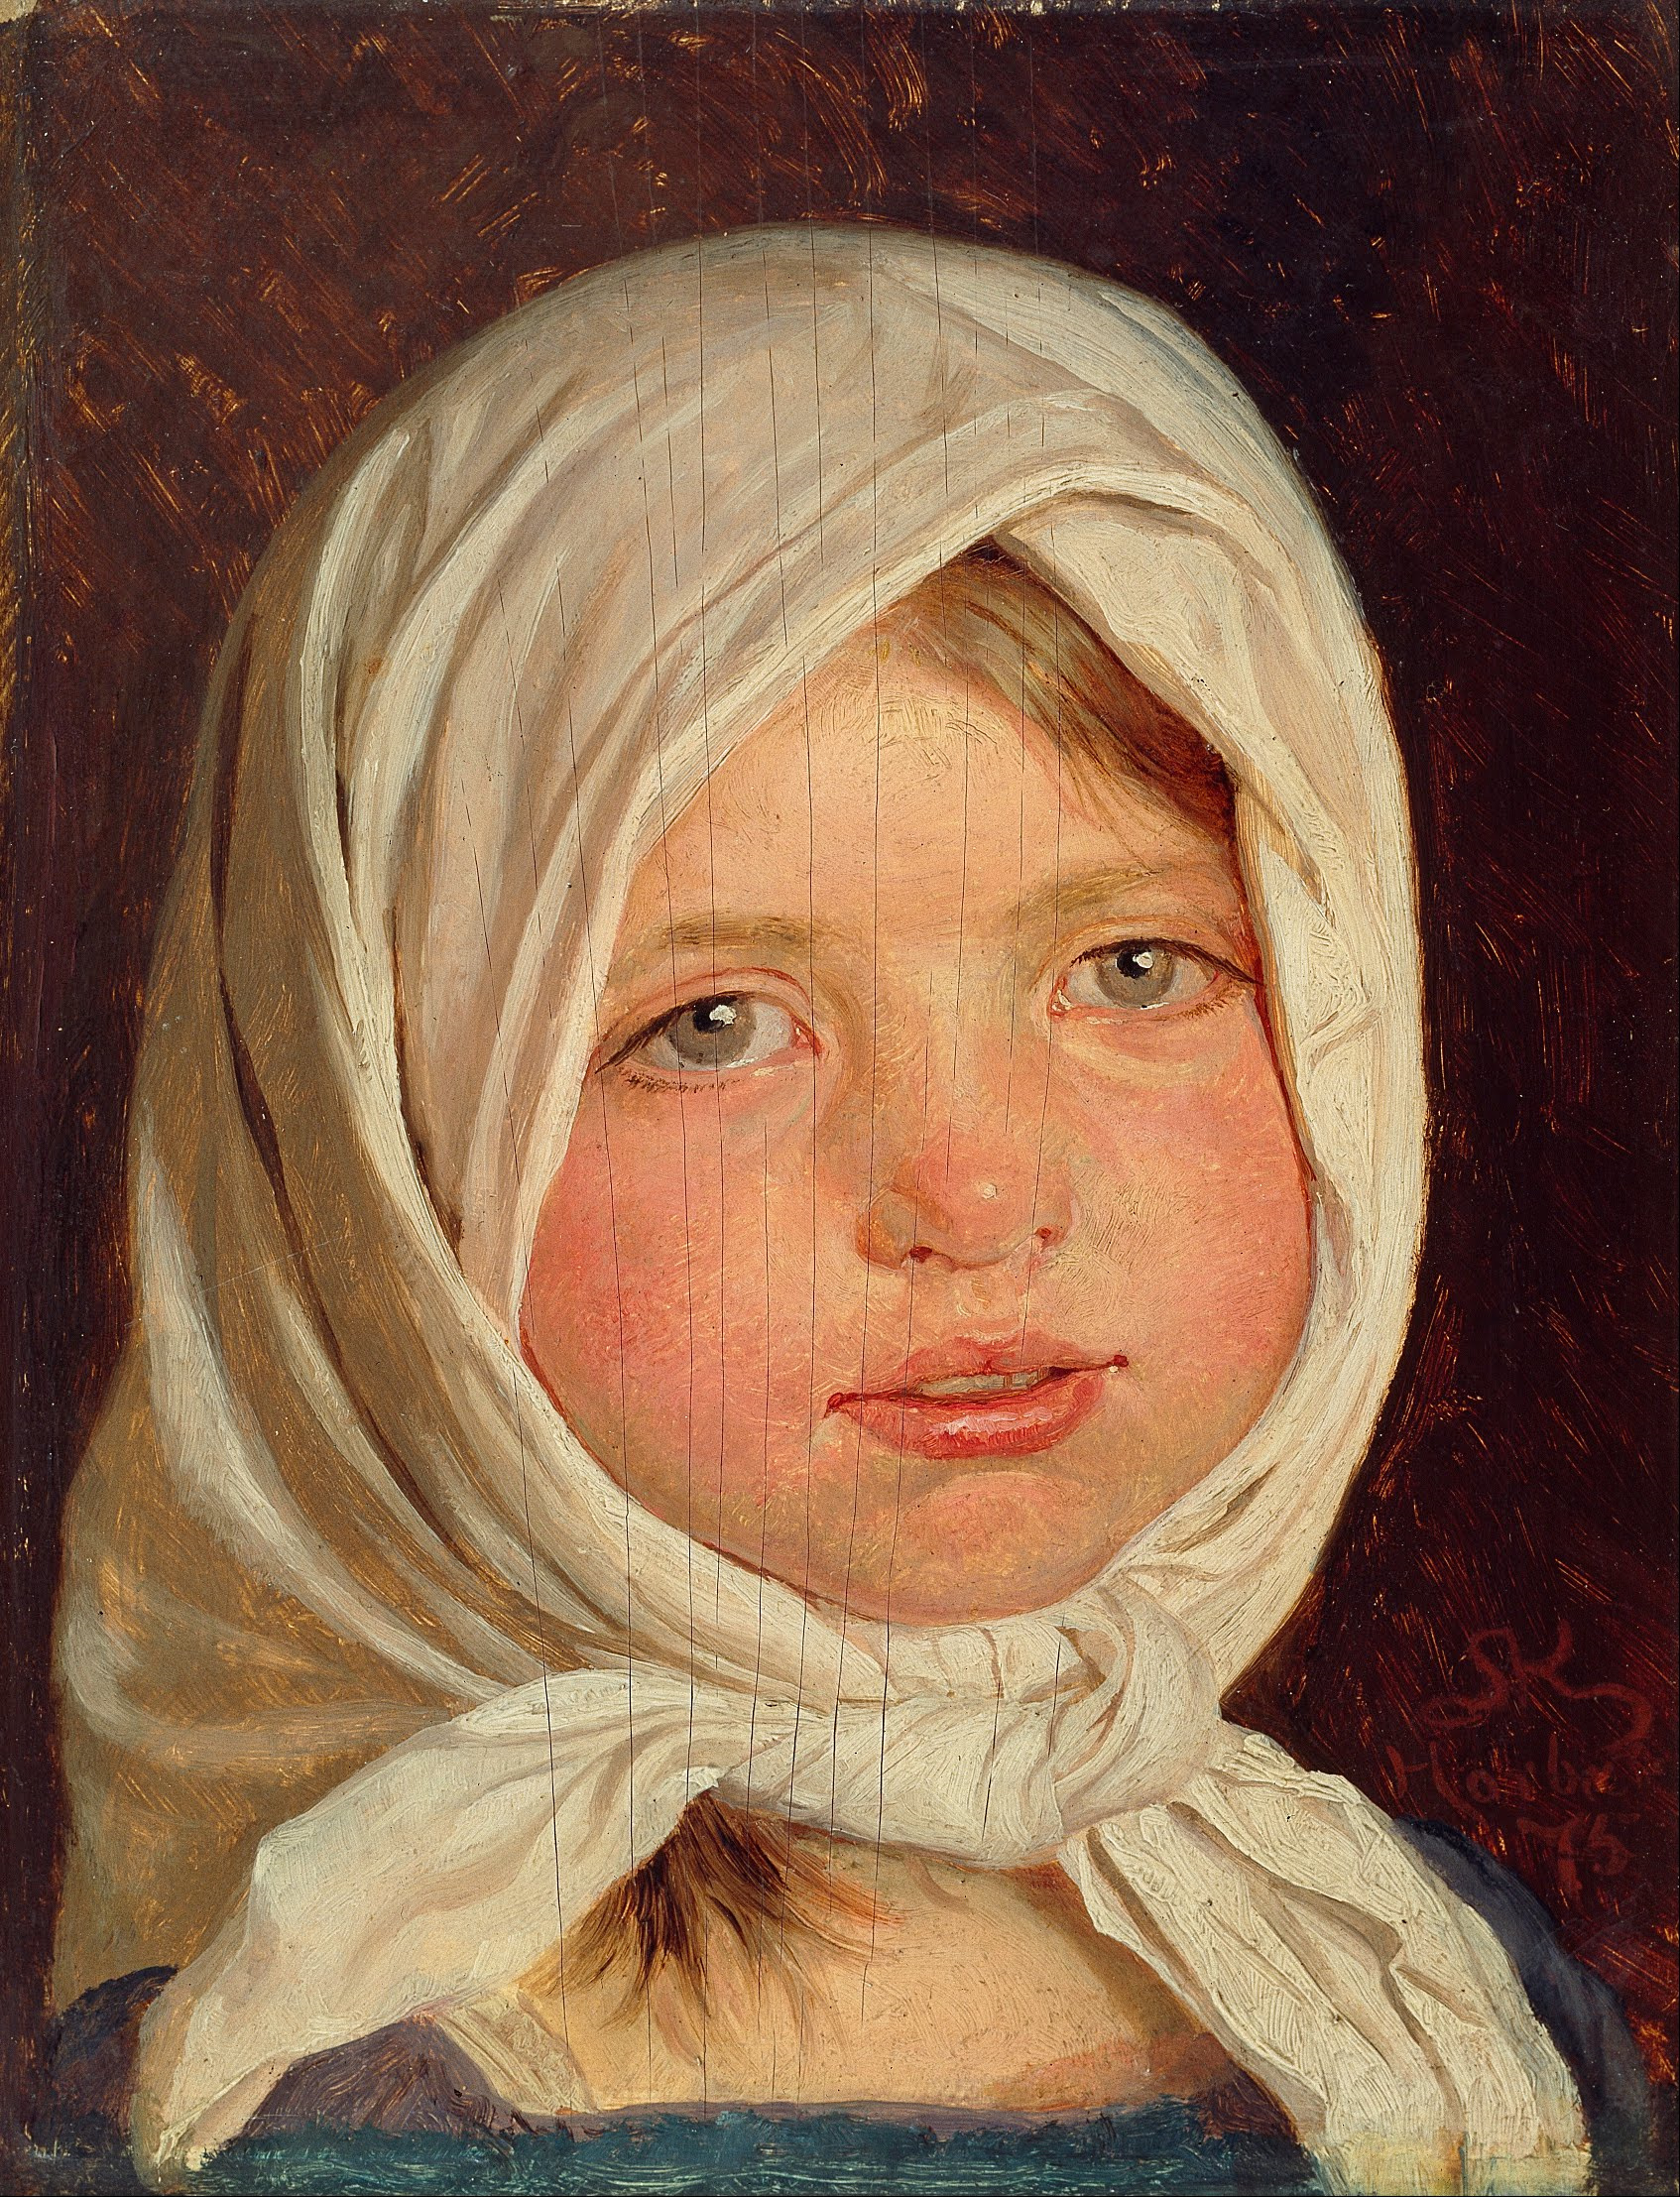 Peder Severin Krøyer - Little girl from Hornbæk - Google Art Project